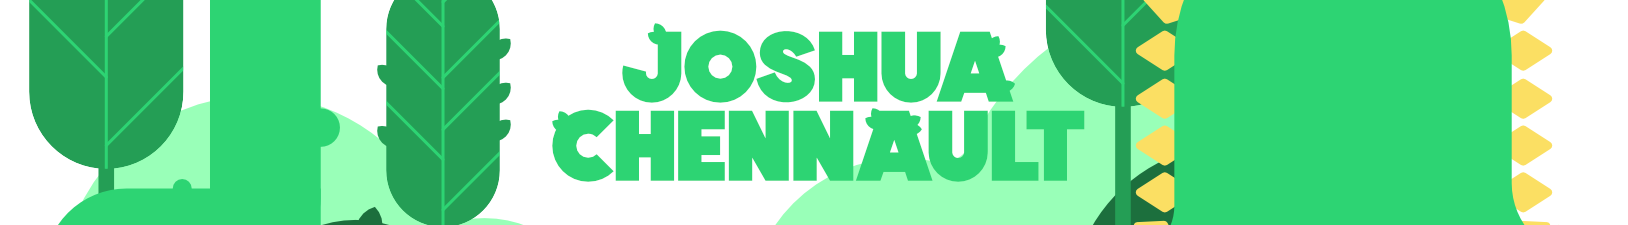 Joshua Chennault's profile banner